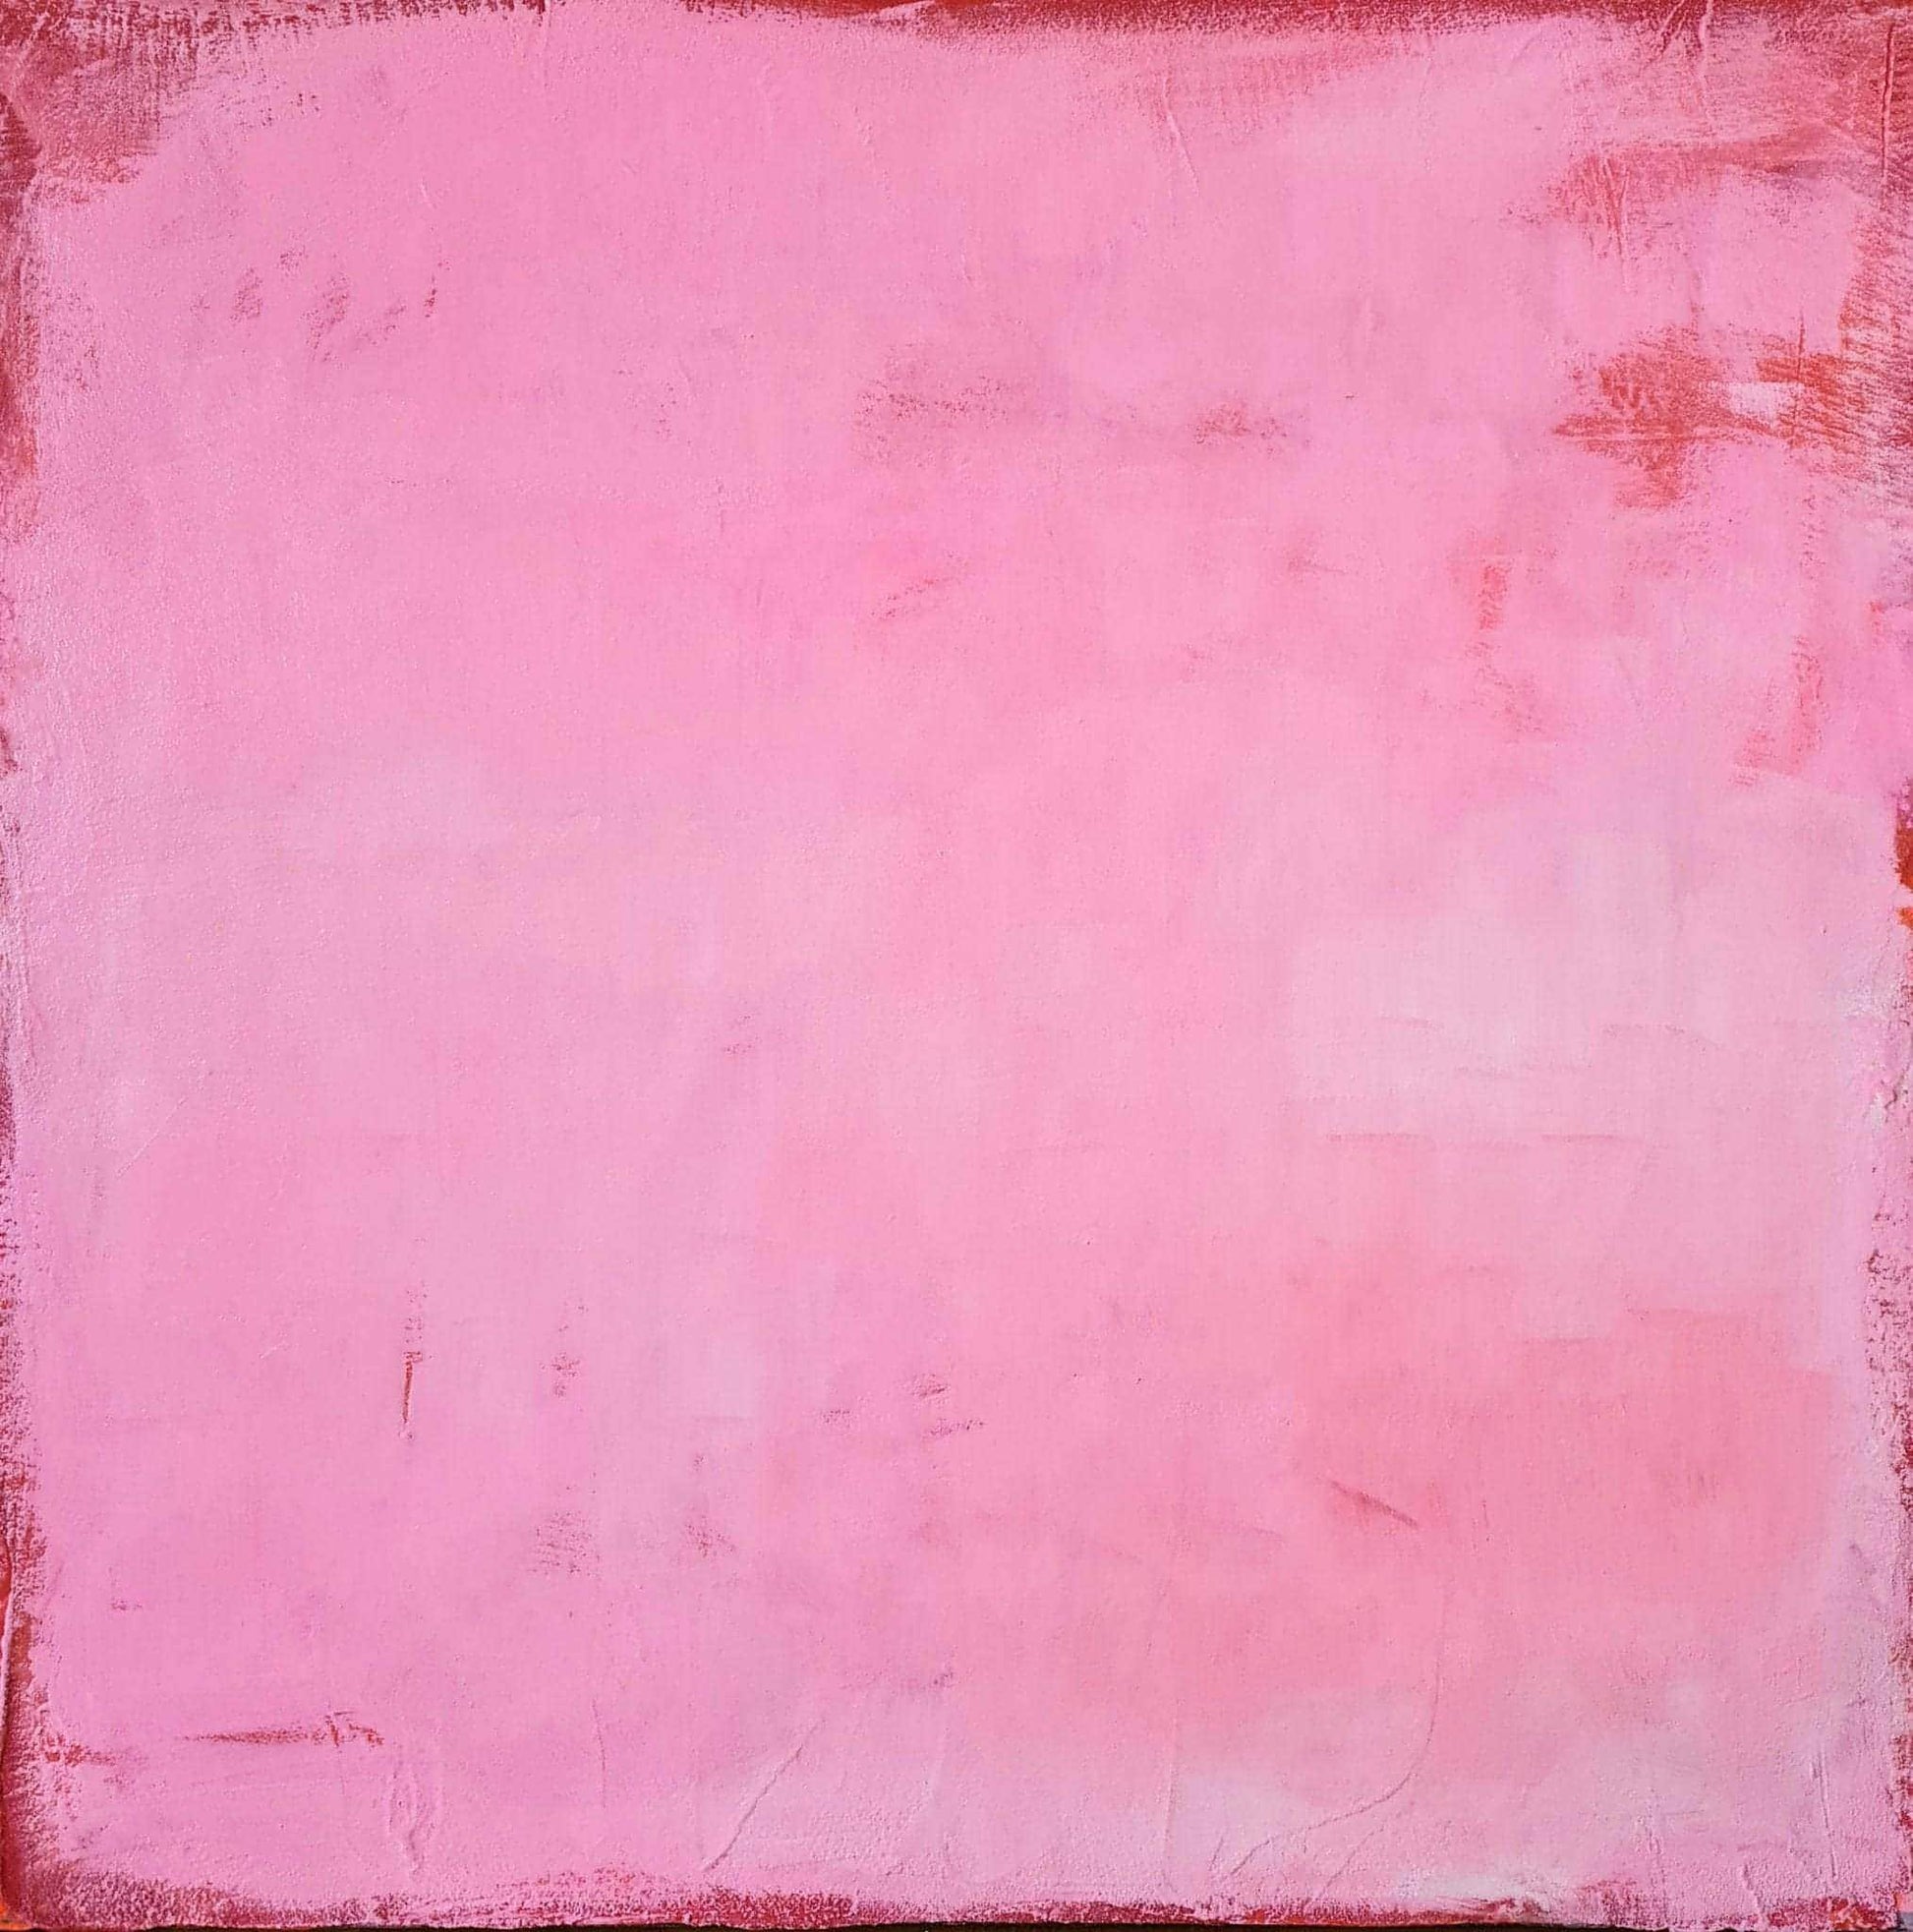  Frauentag / 100 x100 cm / rosa, Frauentag / 120 x 120 cm / rosa, Frauentag / 160 x 120 cm / rosa  abstrakte acrylbilder auf leinwand